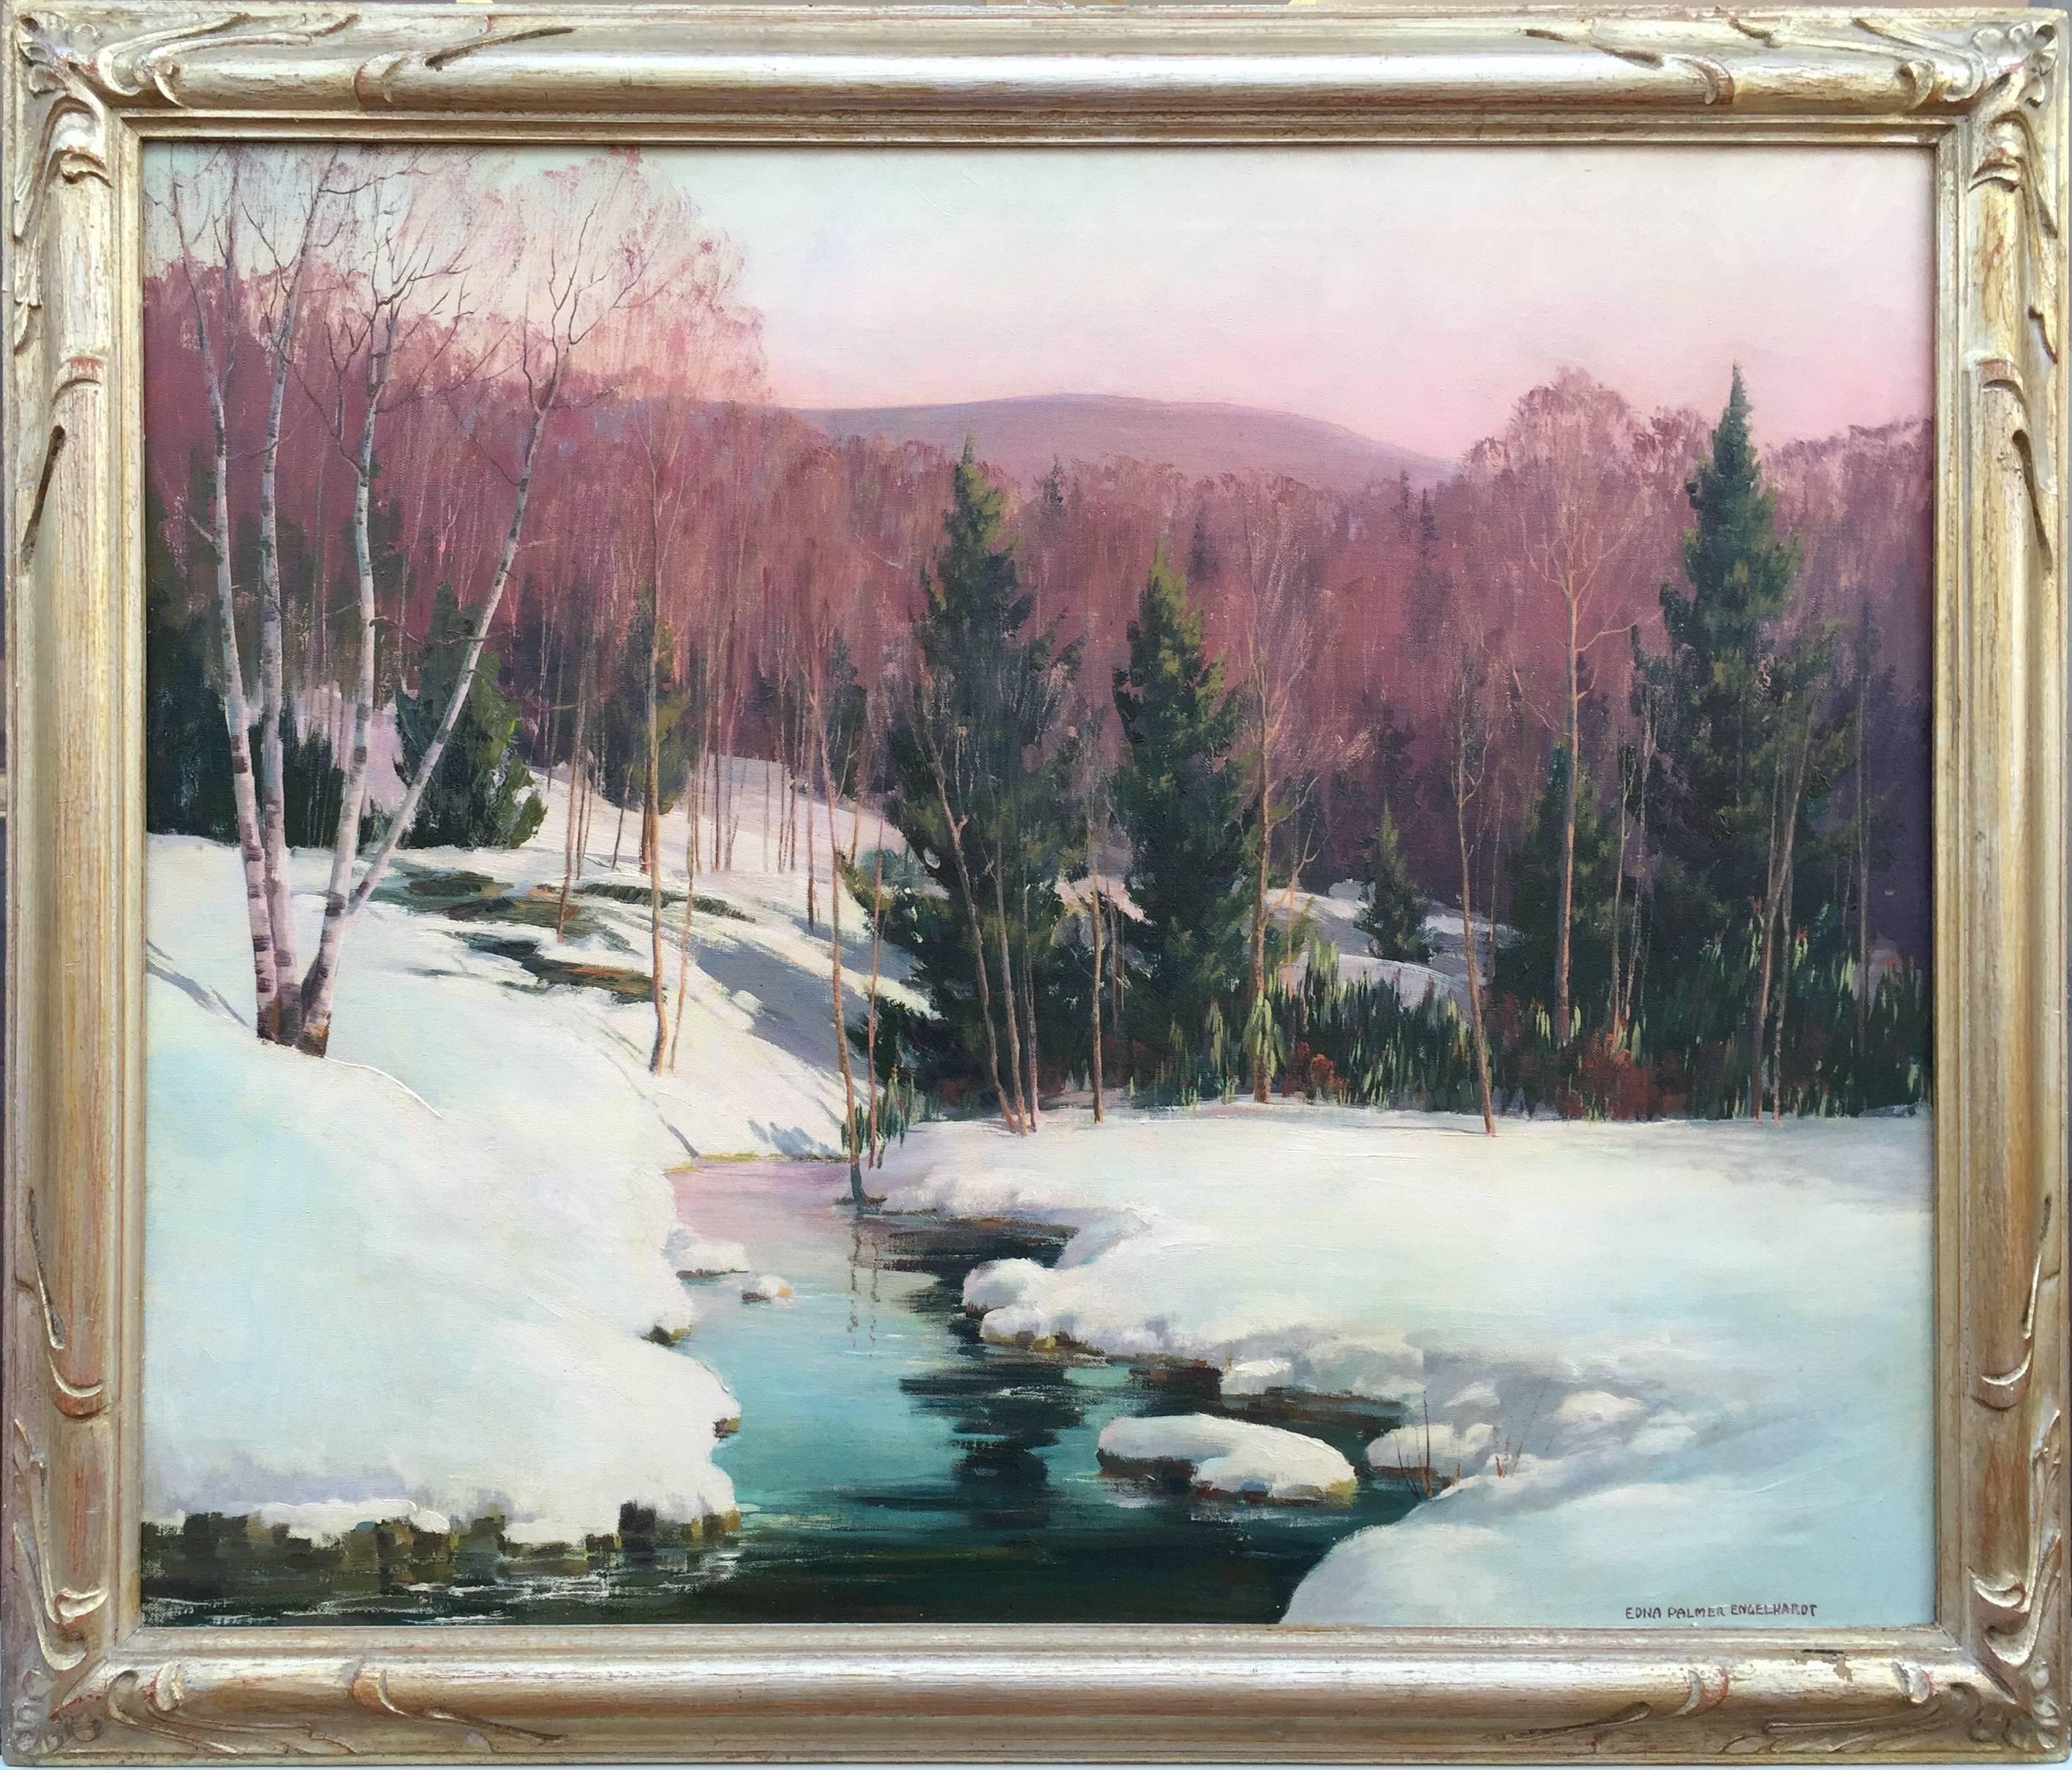 Edna Palmer Engelhardt Landscape Painting - "Eventide in the Poconos"